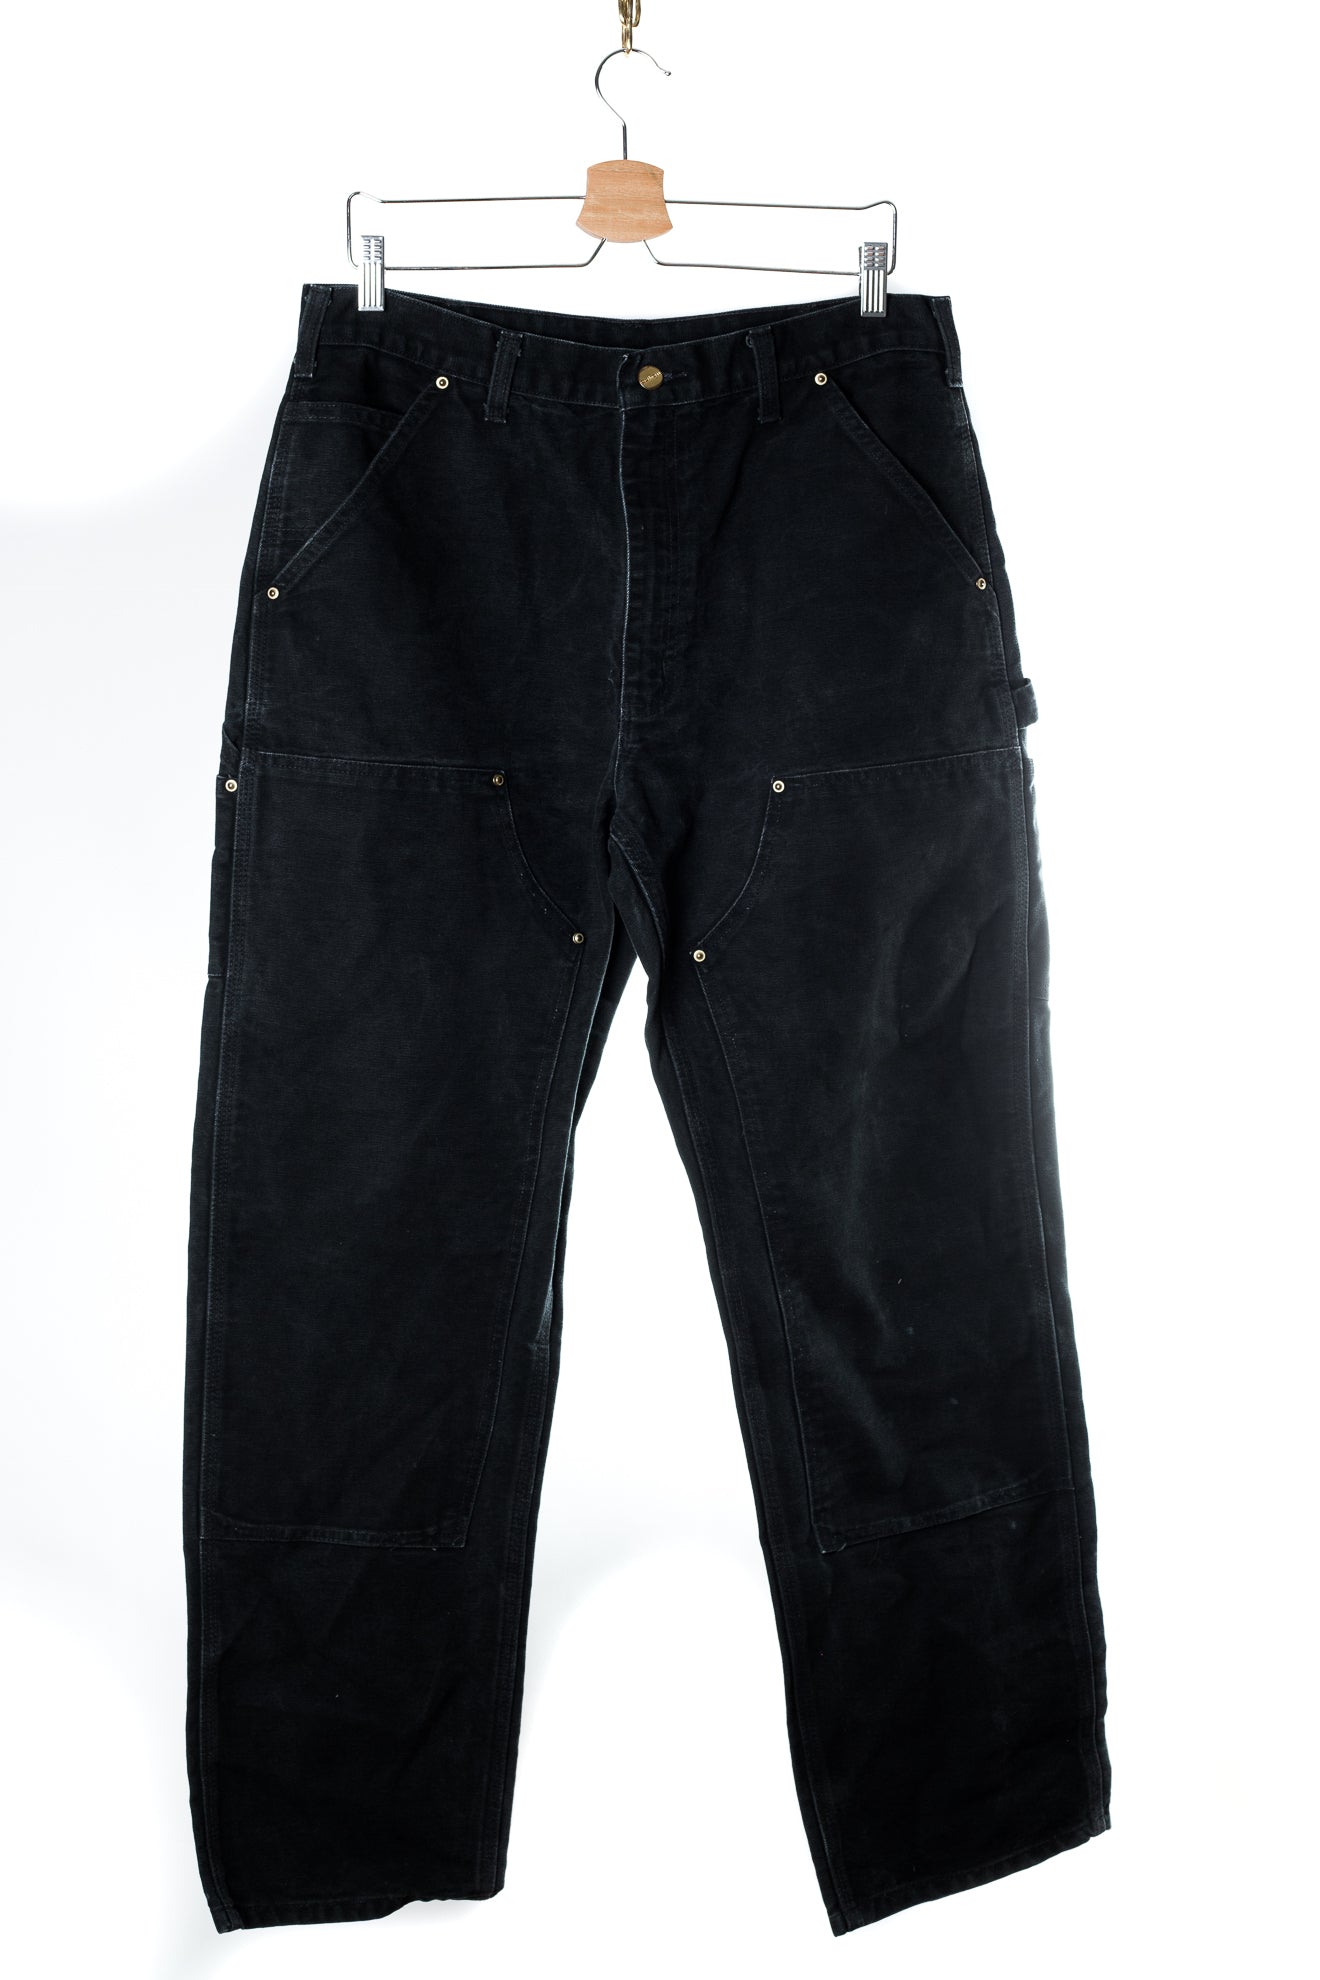 zwarte-carhartt-jeans-met-knoopjes